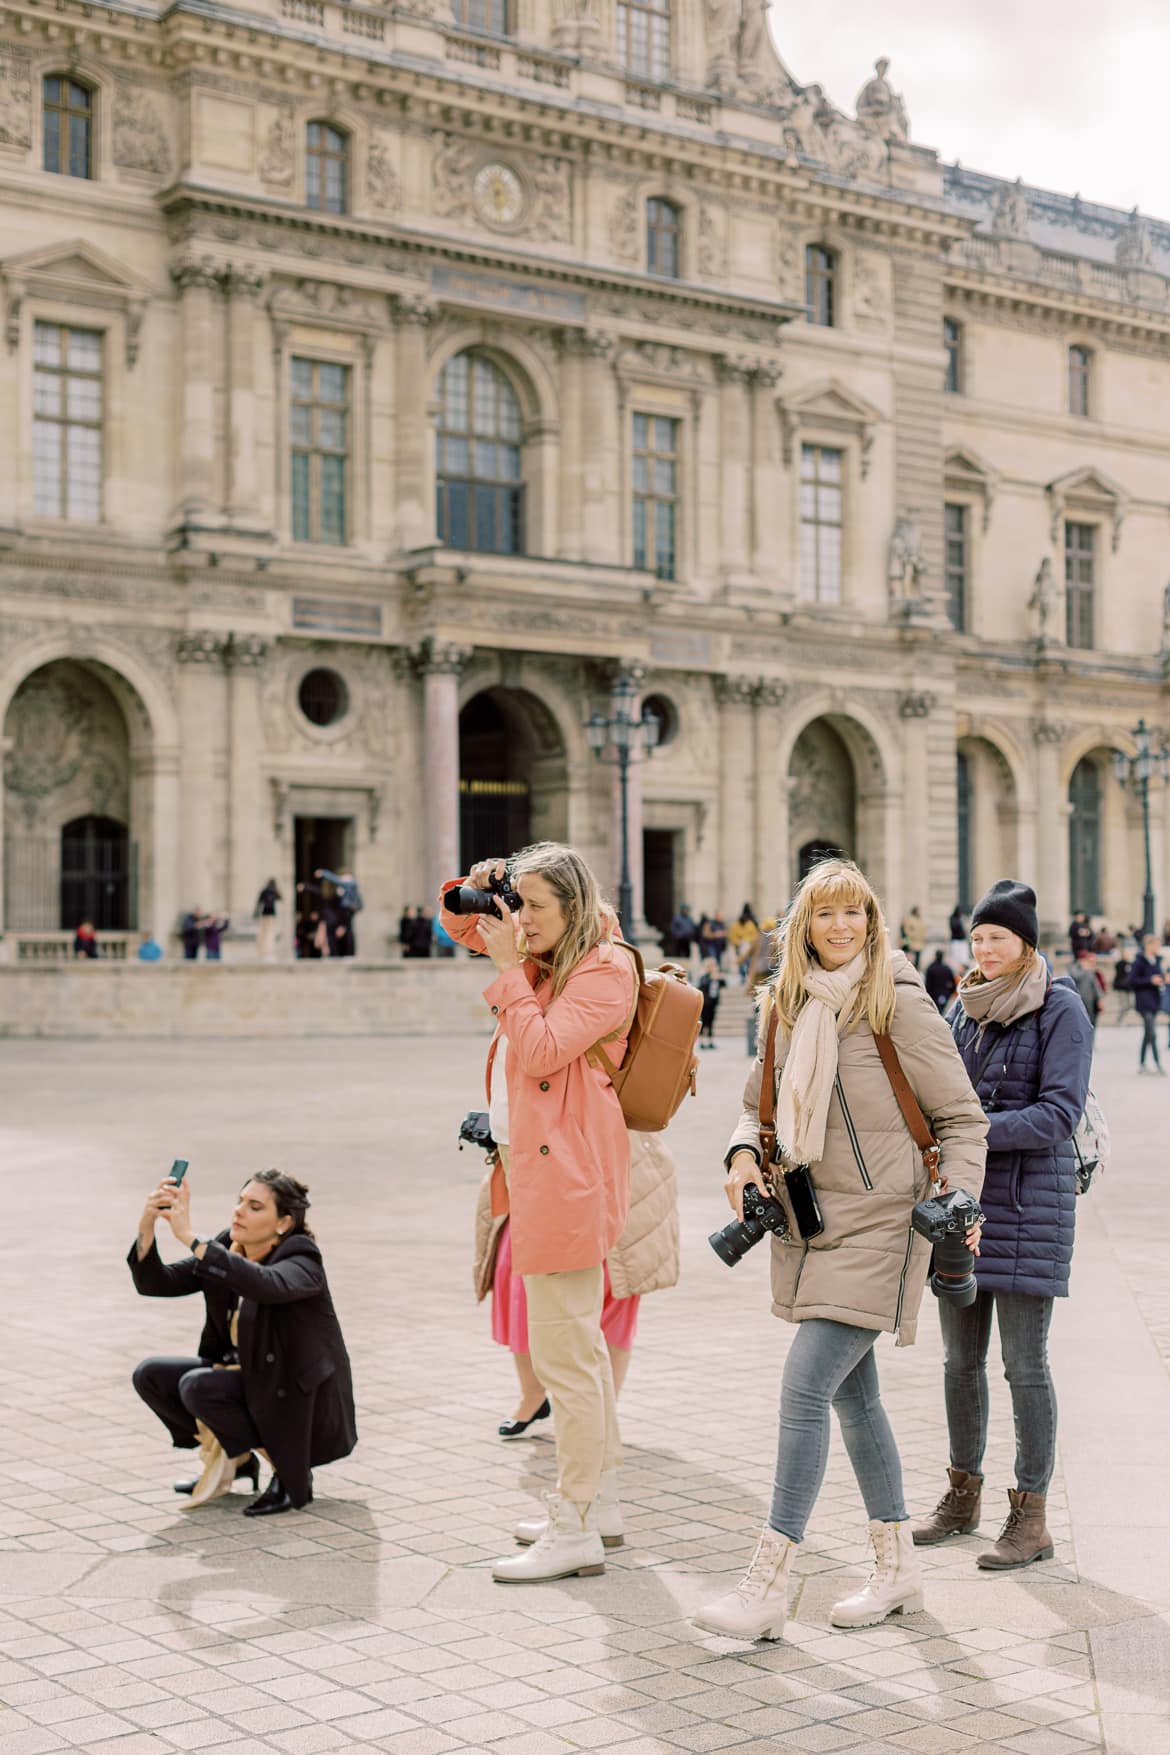 Fotografinnen fotografieren im Innenhof des Louvre